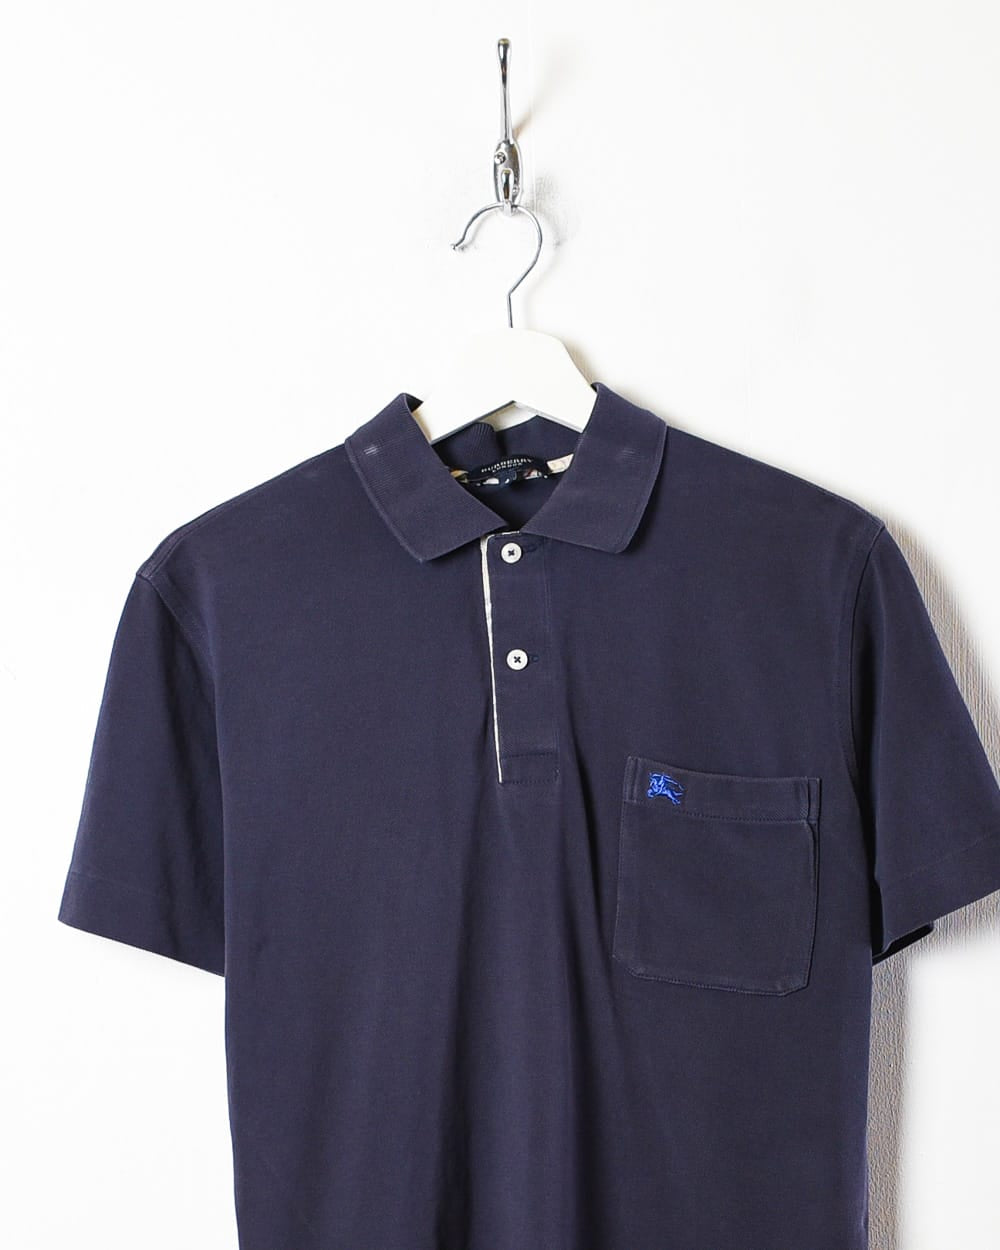 Navy Burberry Pocket Polo Shirt - Small